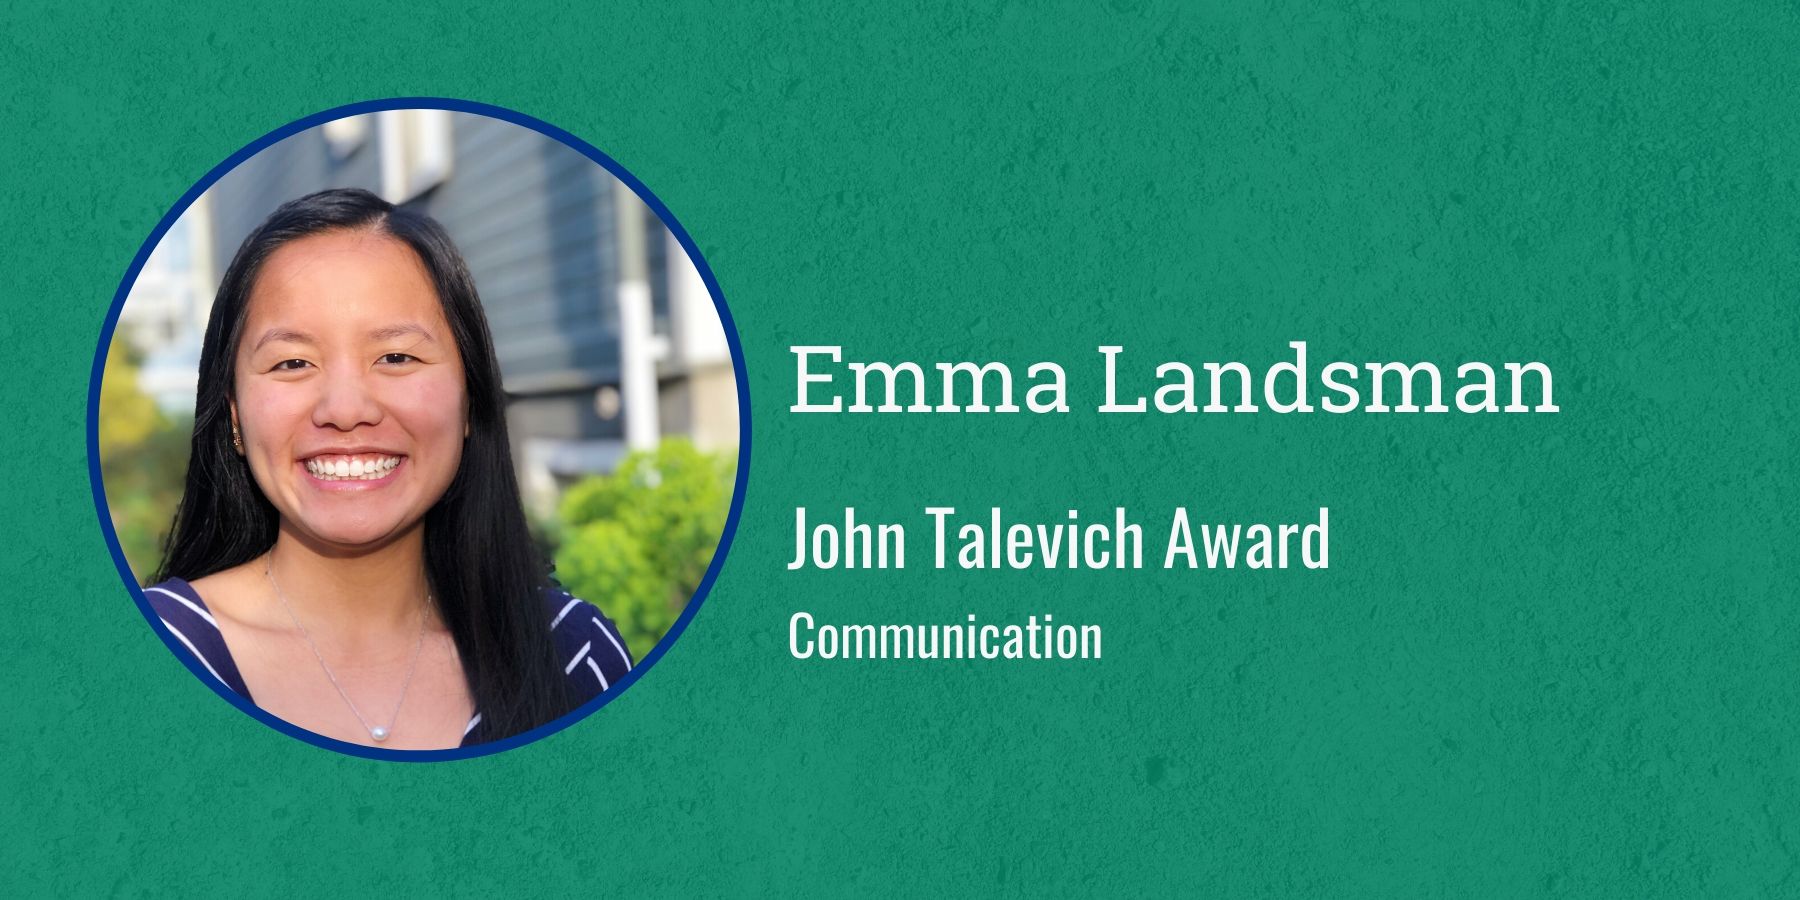 Photo of Emma Landsman and text John Talevich Award, Communication